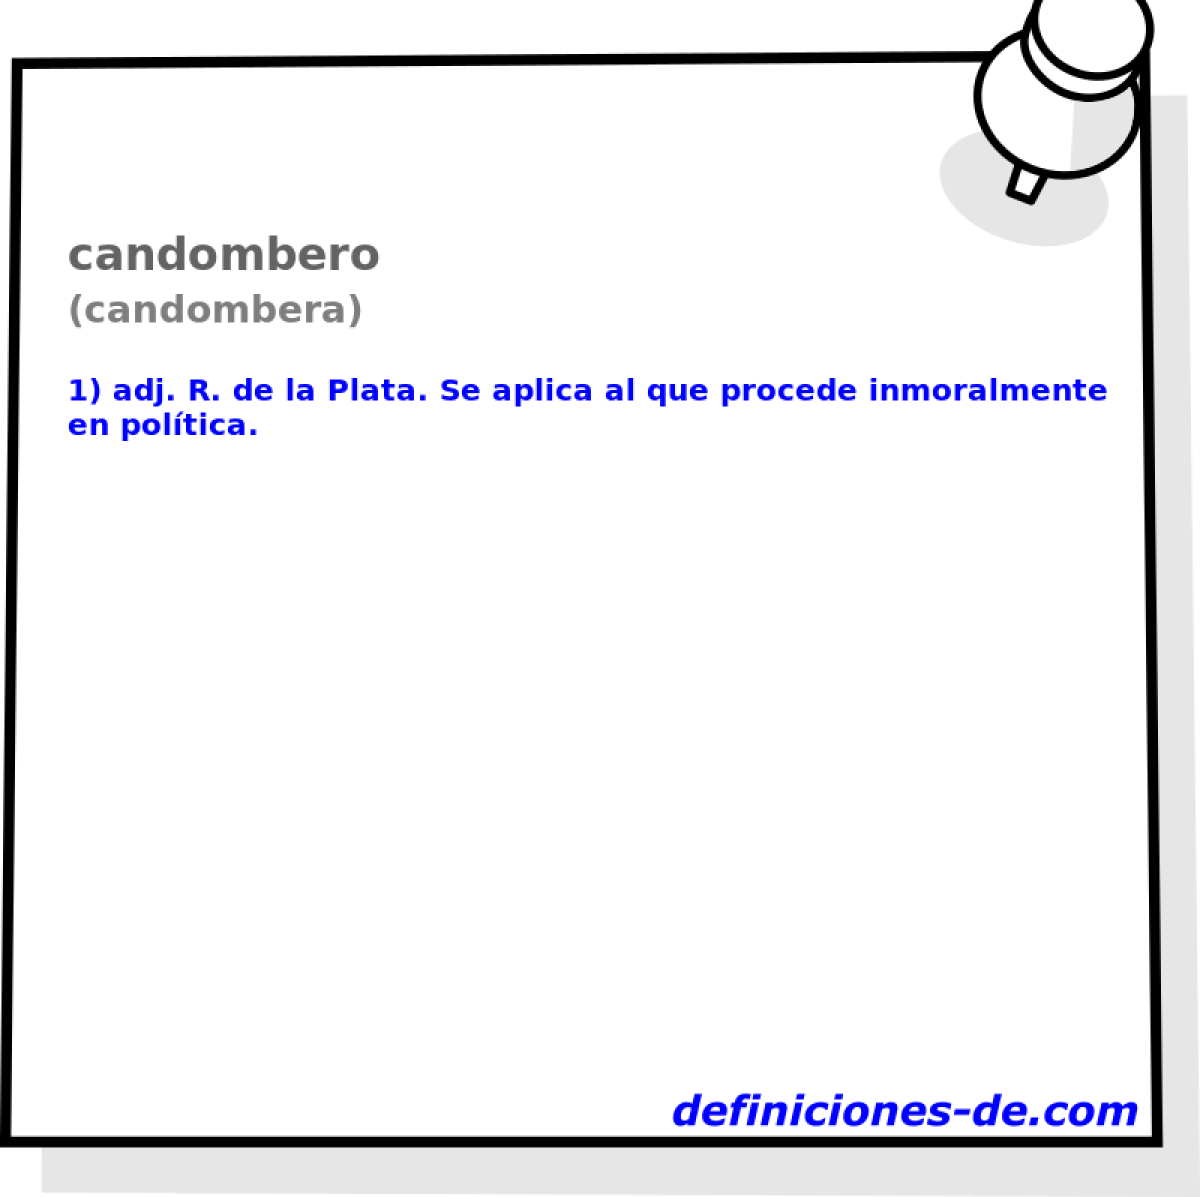 candombero (candombera)